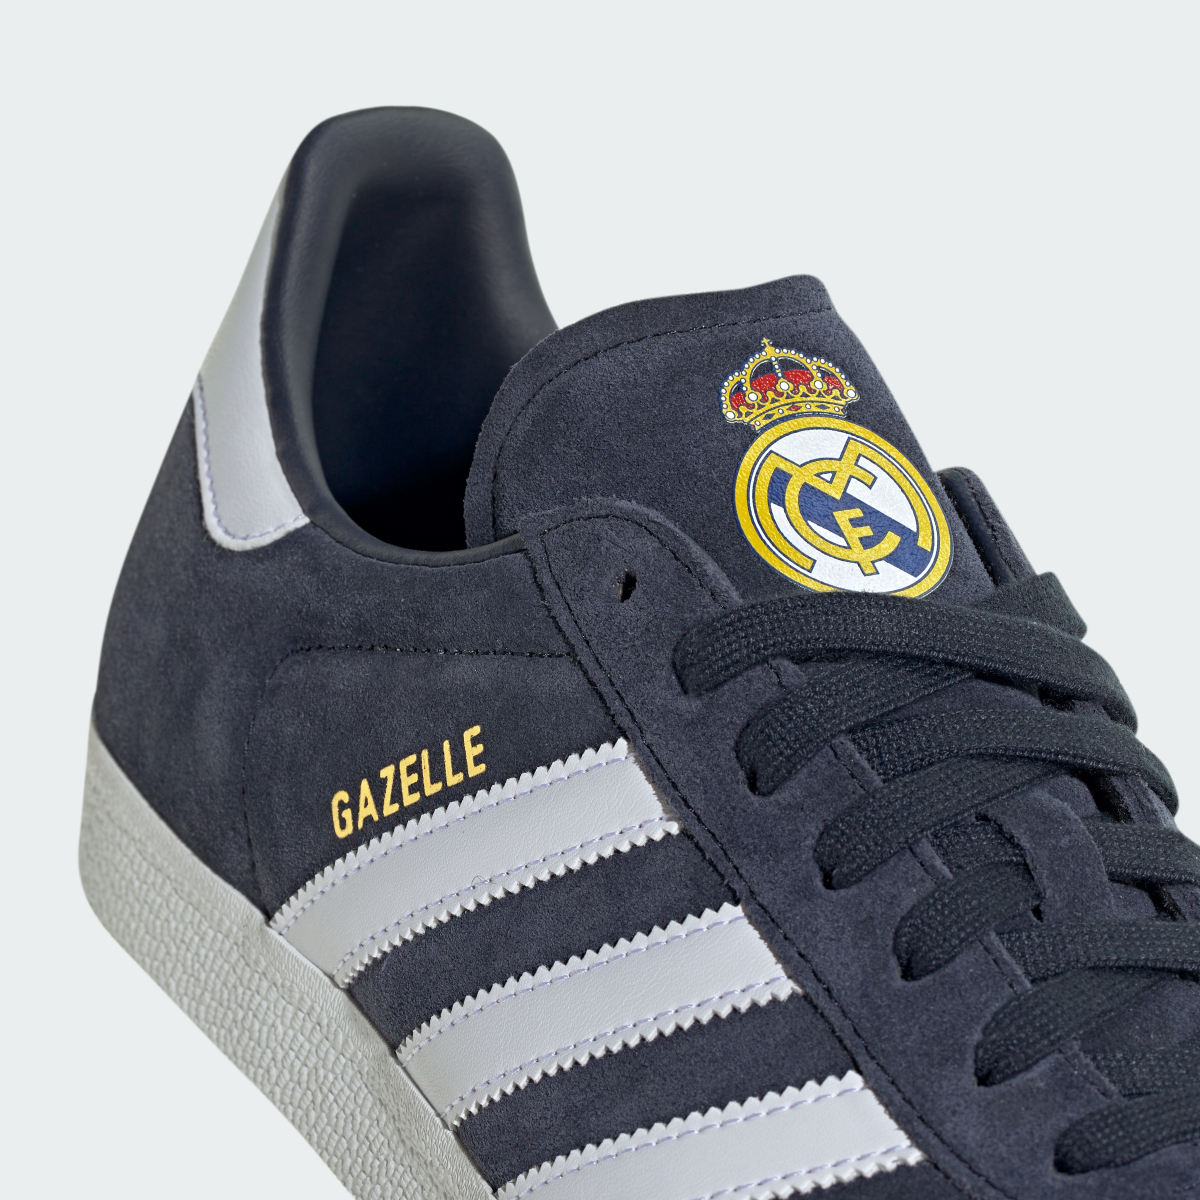 Adidas Gazelle Real Madrid Shoes. 9